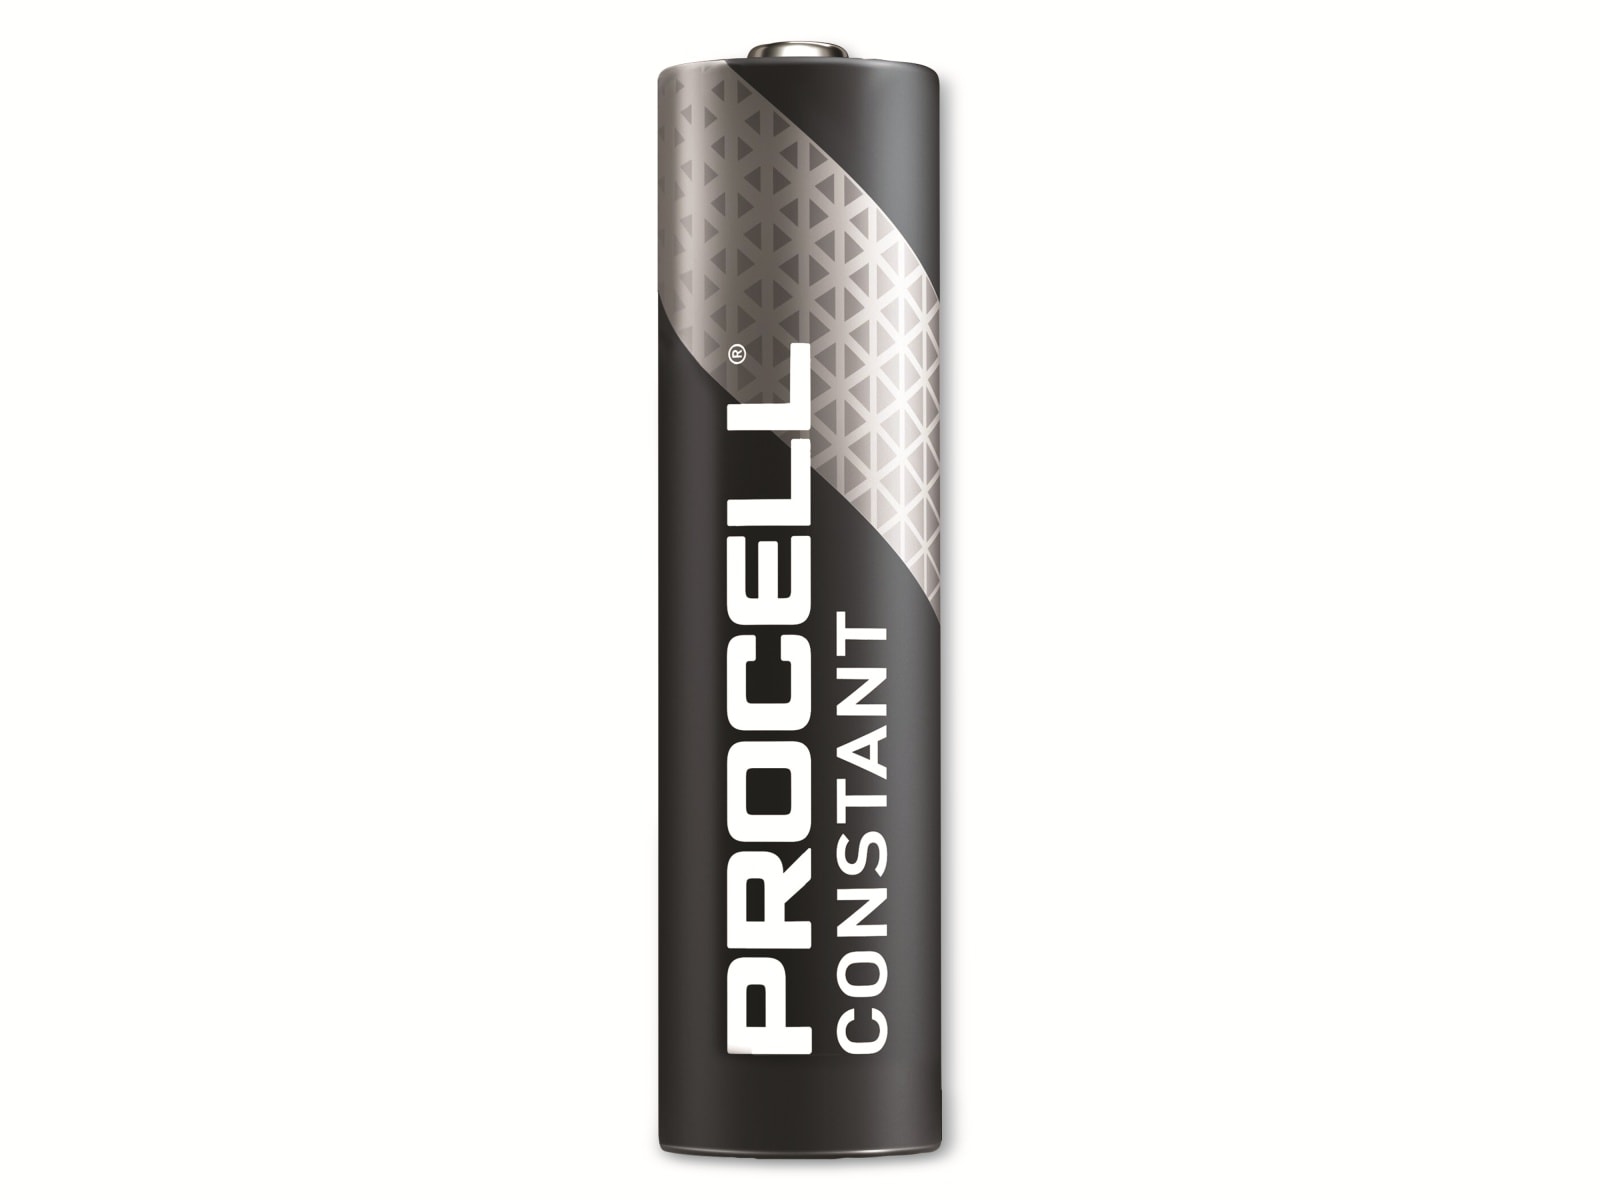 DURACELL Alkaline-Micro-Batterie LR03, 1.5V, Procell Constant, 10 Stück